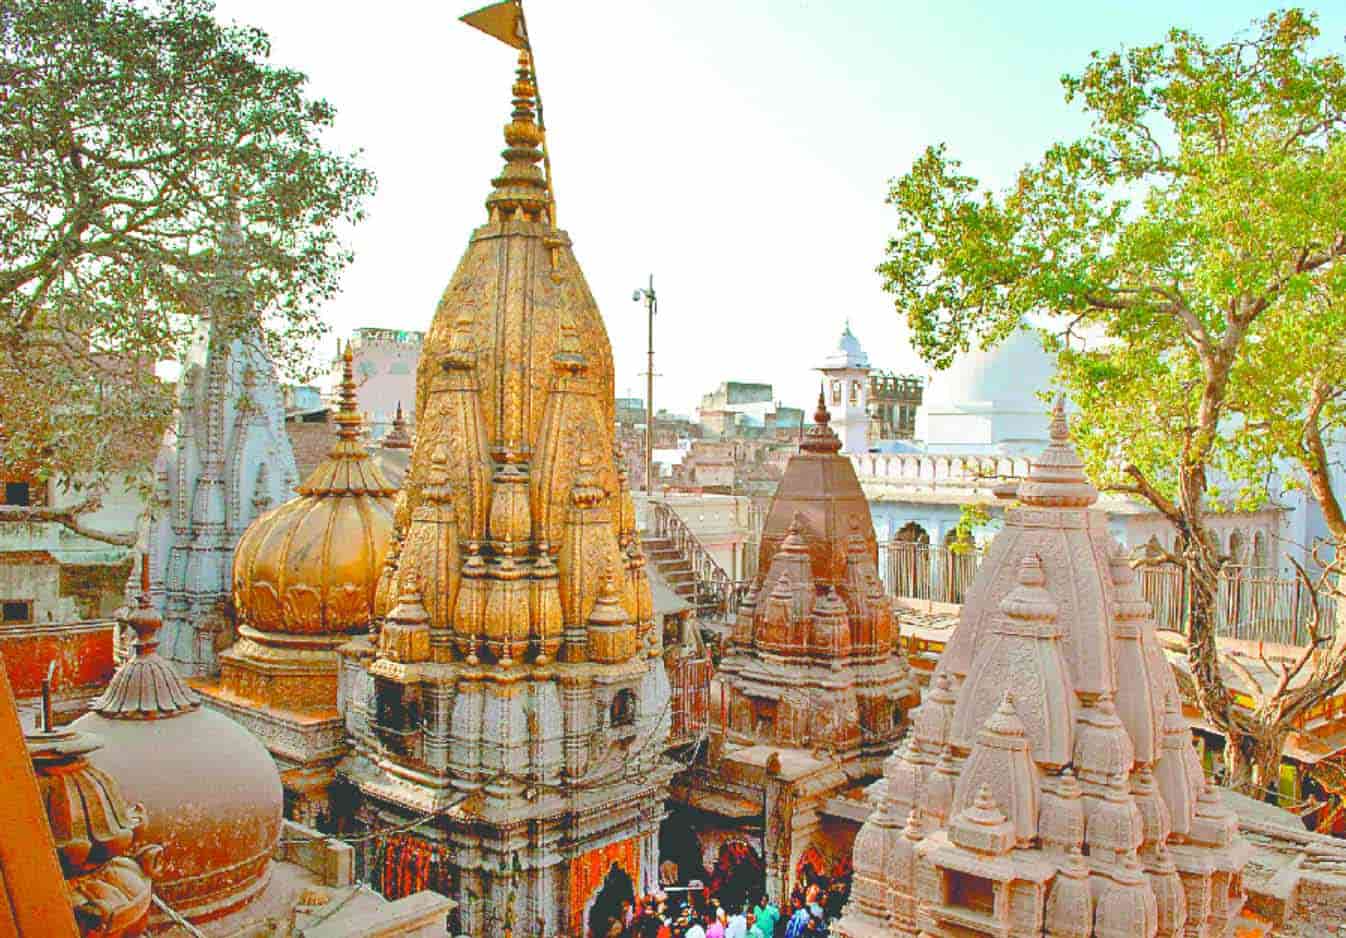 Kashi Vishwanath Temple